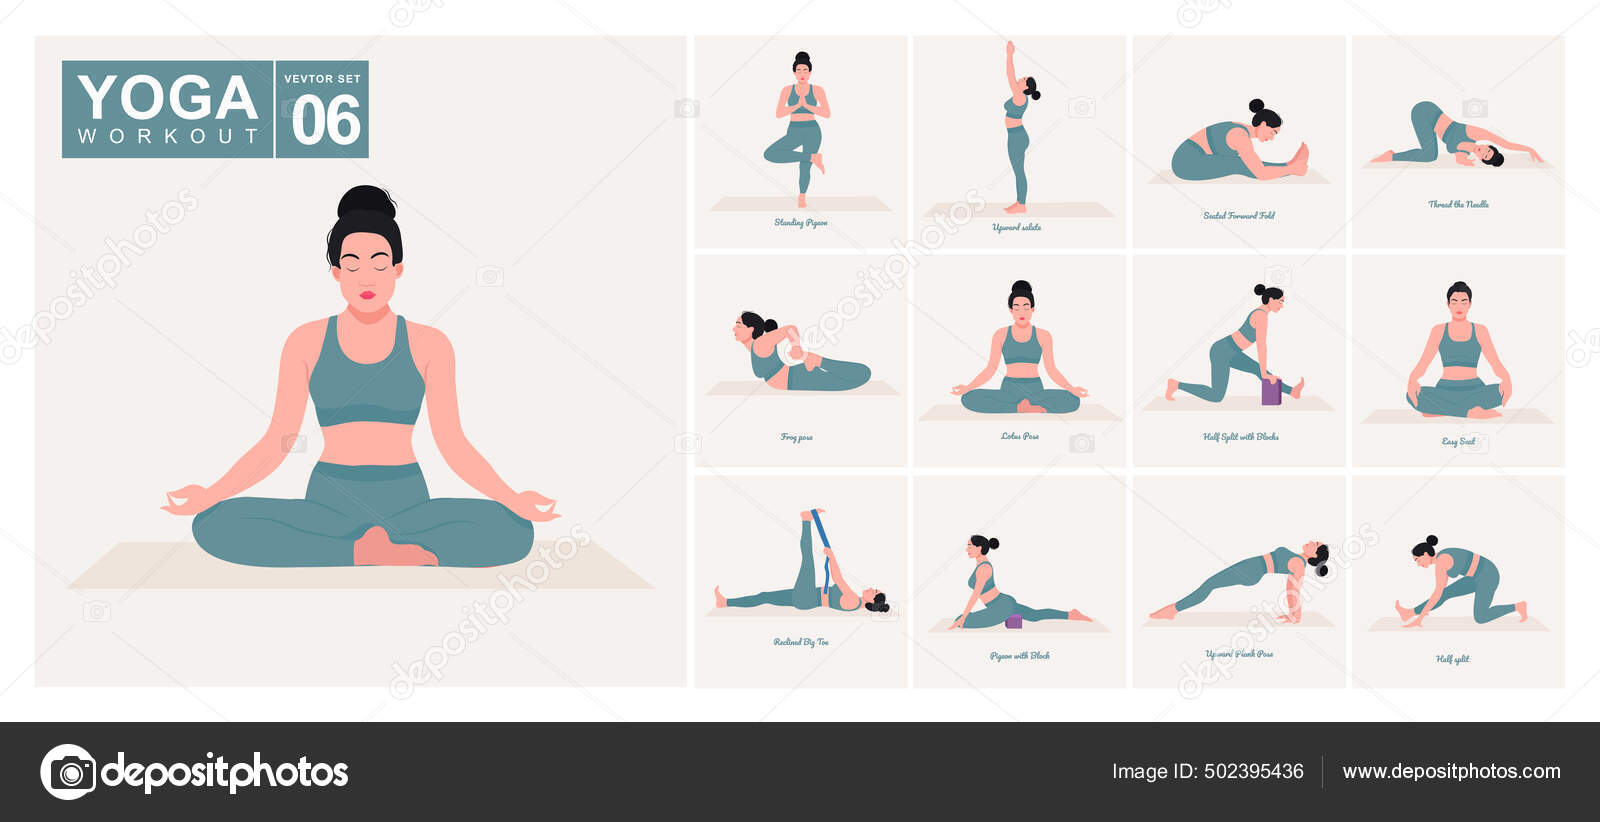 https://st2.depositphotos.com/30450572/50239/v/1600/depositphotos_502395436-stock-illustration-yoga-workout-set-young-woman.jpg